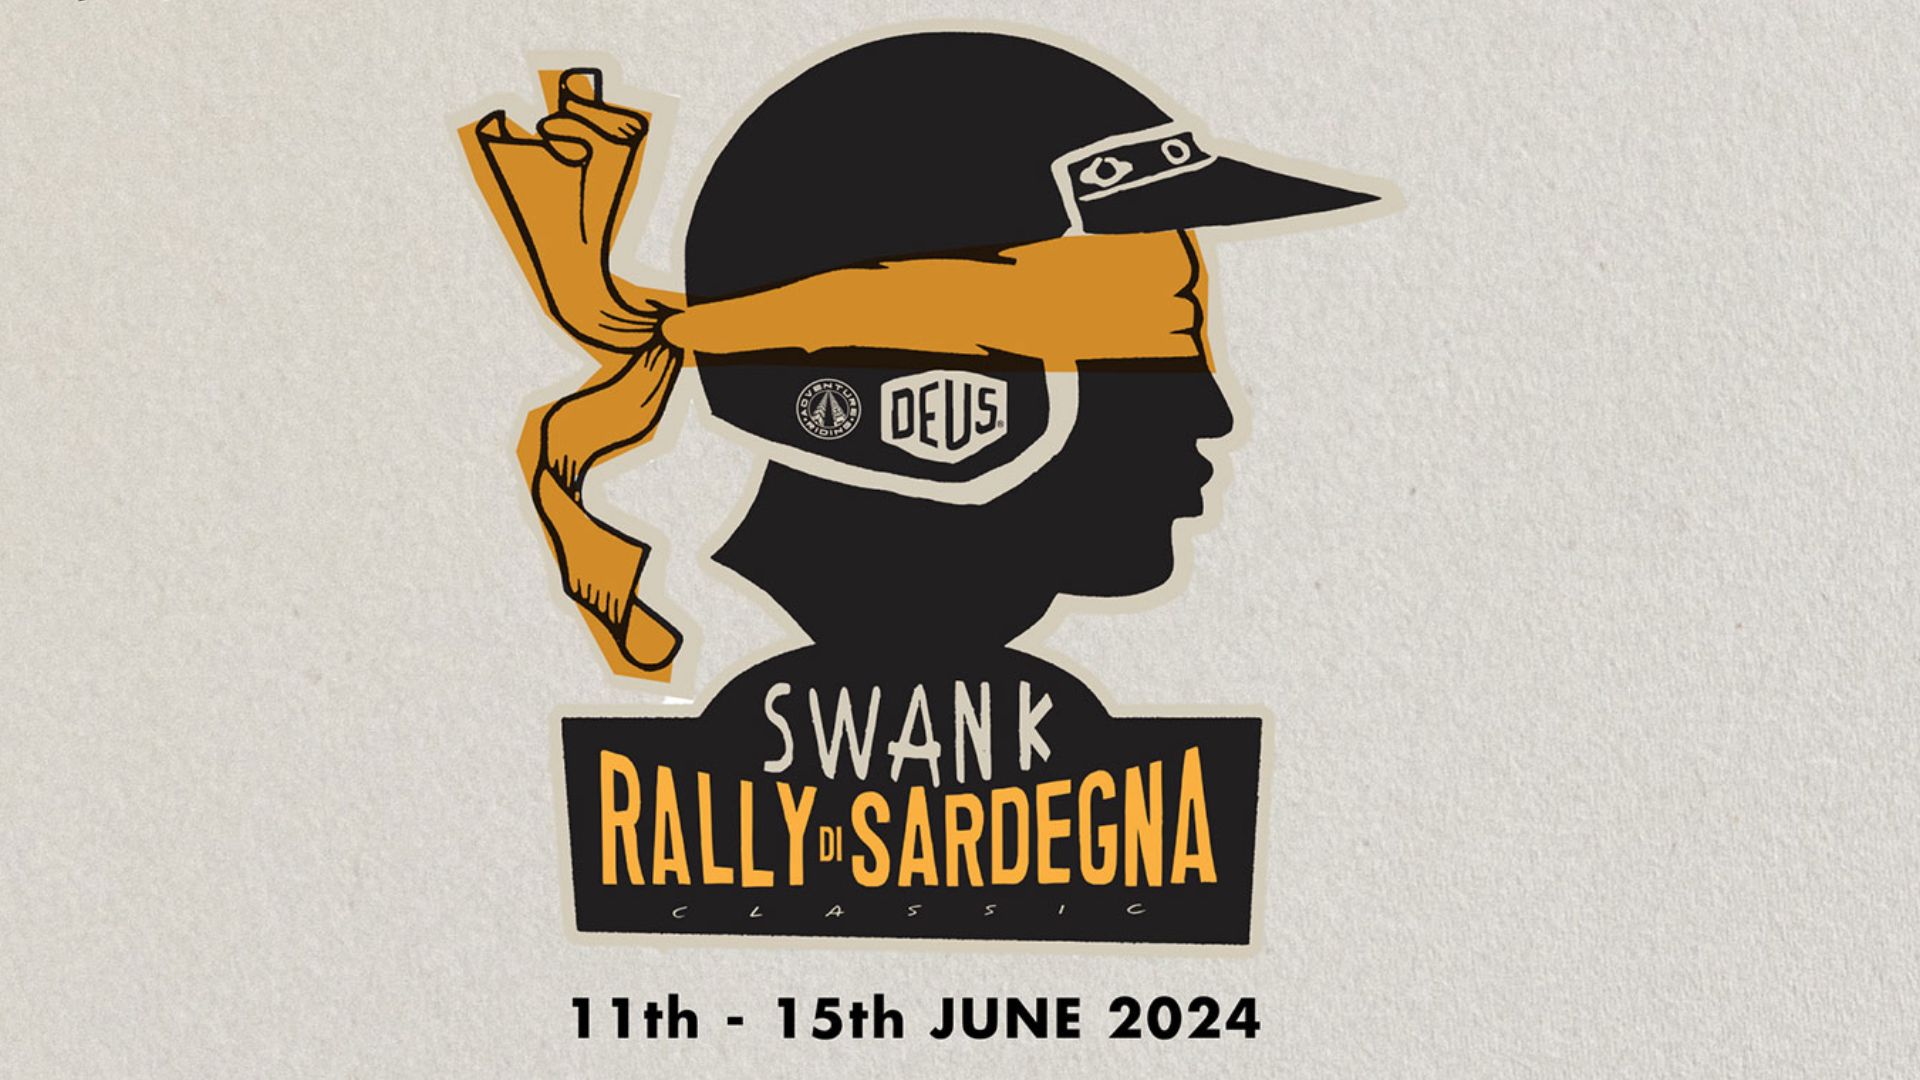 Swank Rally di Sardegna